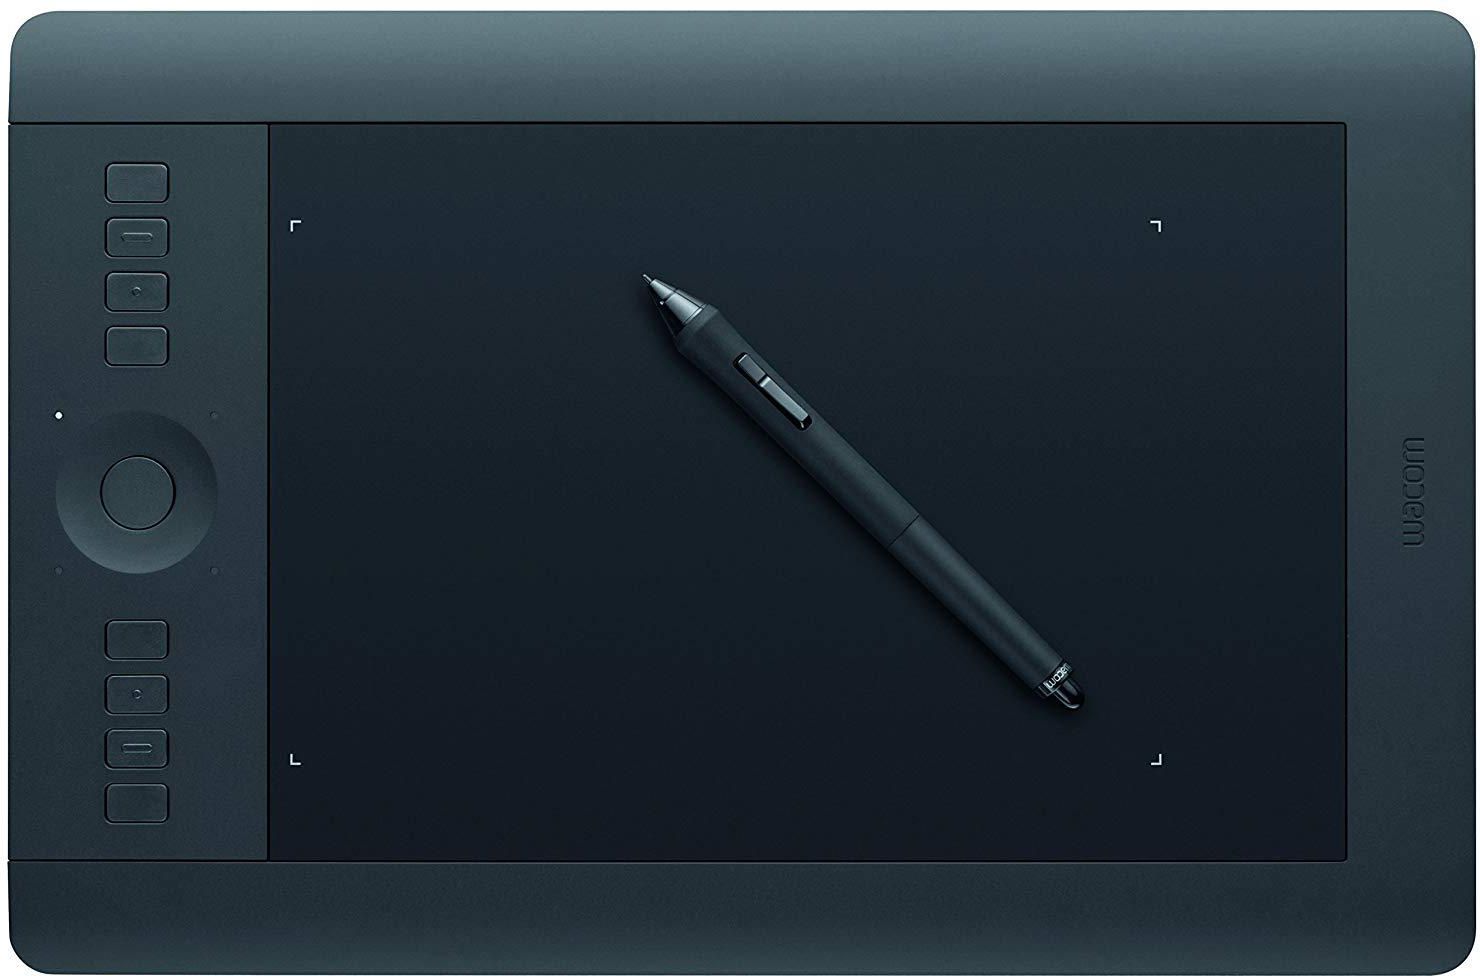 Wacom PTH651 Intuos Pro Professional Pen & Touch Tablet (Black, Medium)